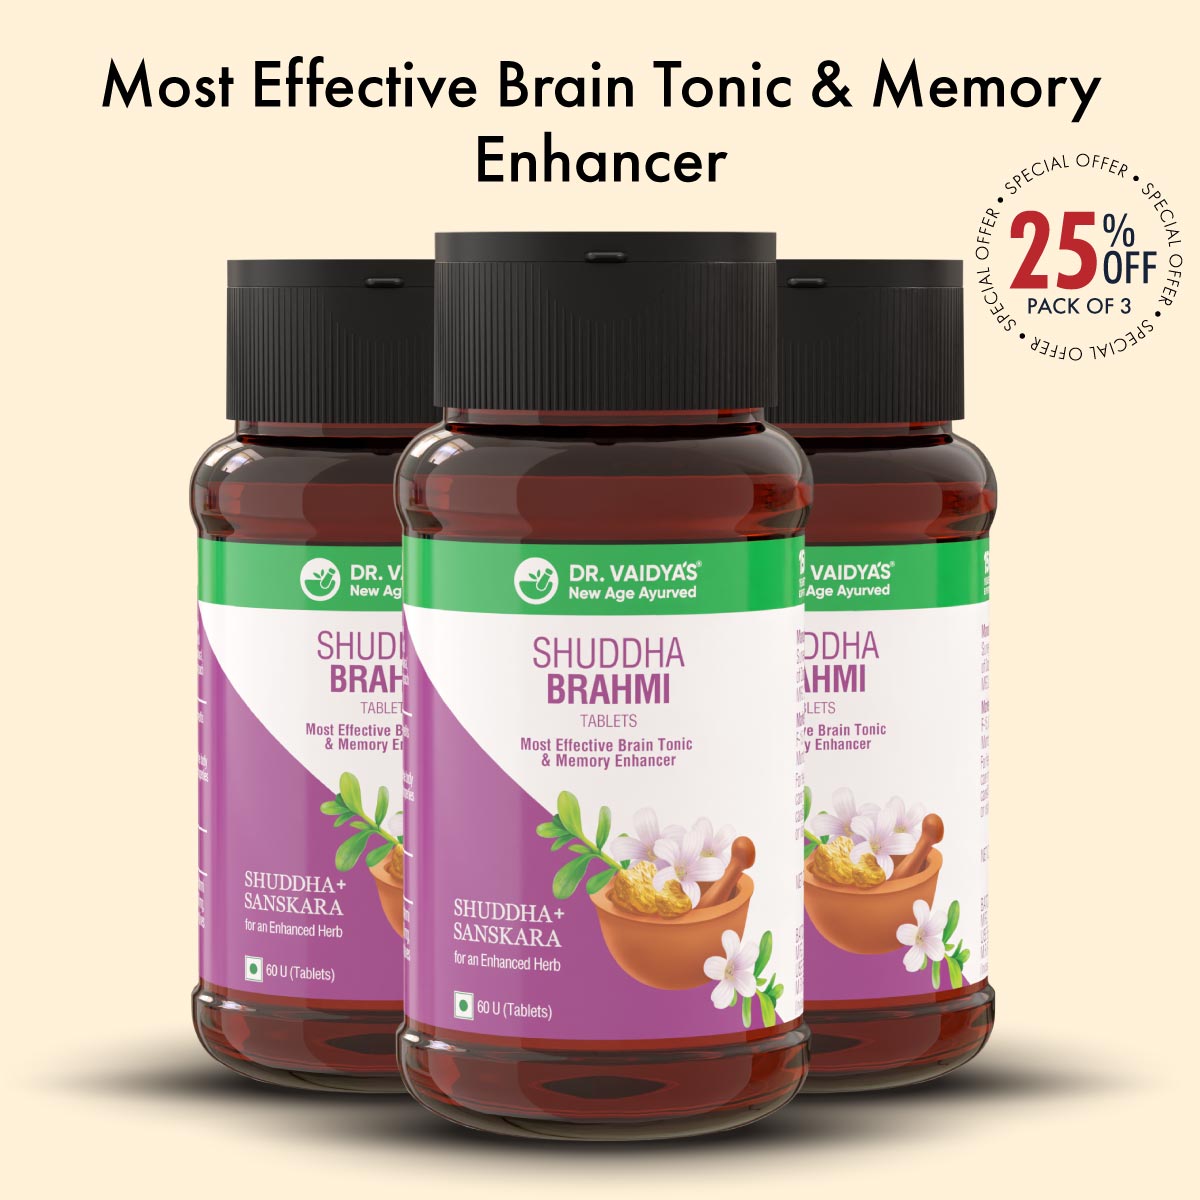 Shuddha Brahmi: Most Effective Brain Tonic & Memory Enhancer